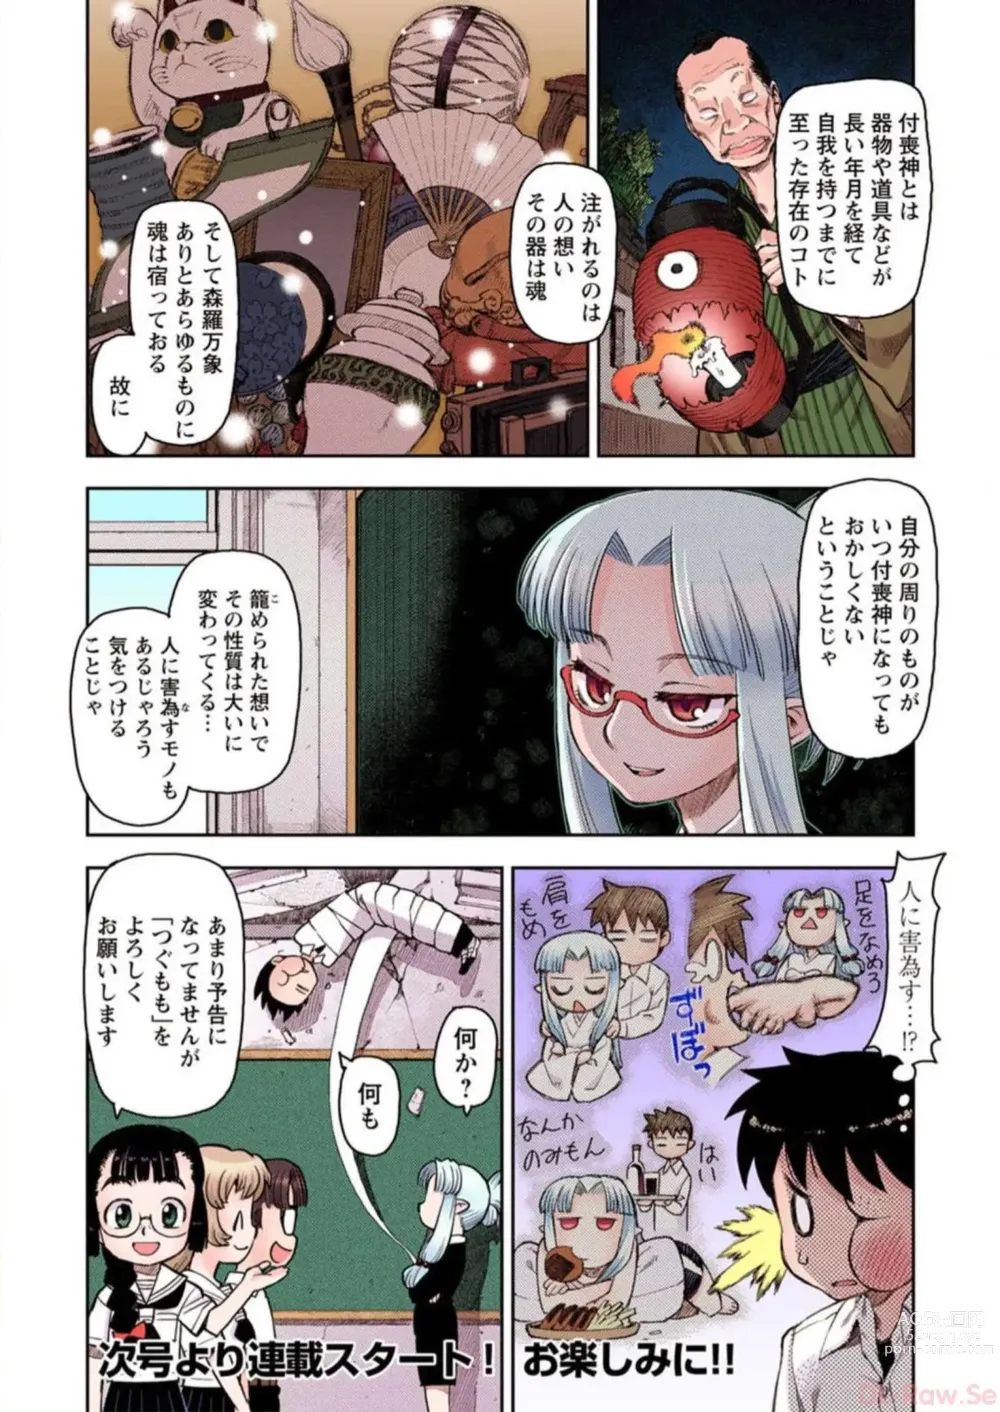 Page 170 of manga Tsugumomo Digital Colored Comics V1